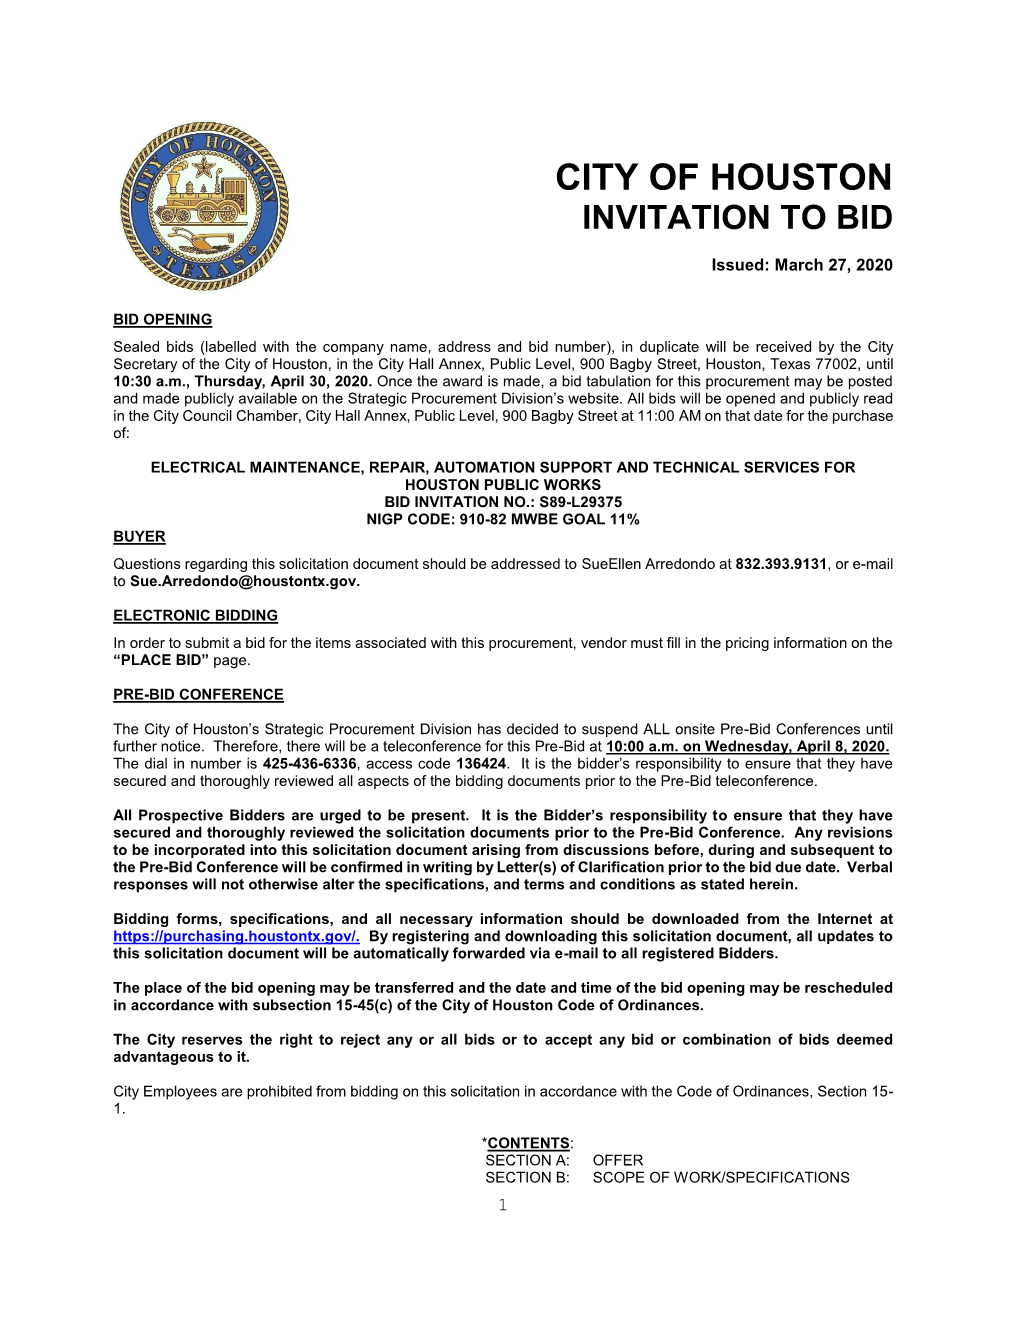 City of Houston Invitation to Bid